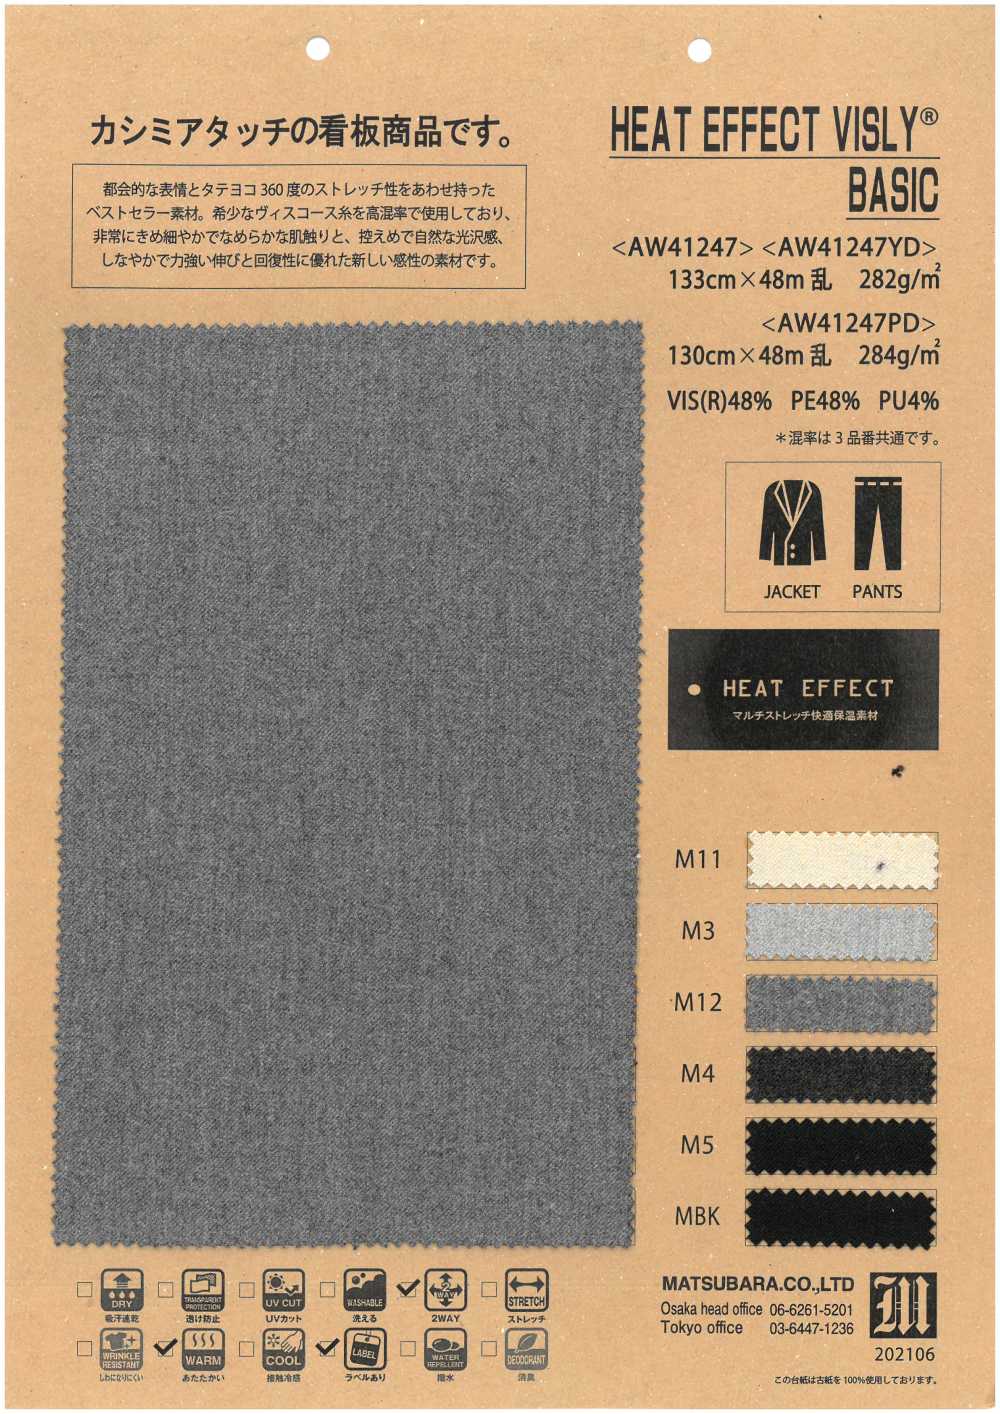 AW41247YD Heat Effect Bisley Basic[Textile / Fabric] Matsubara